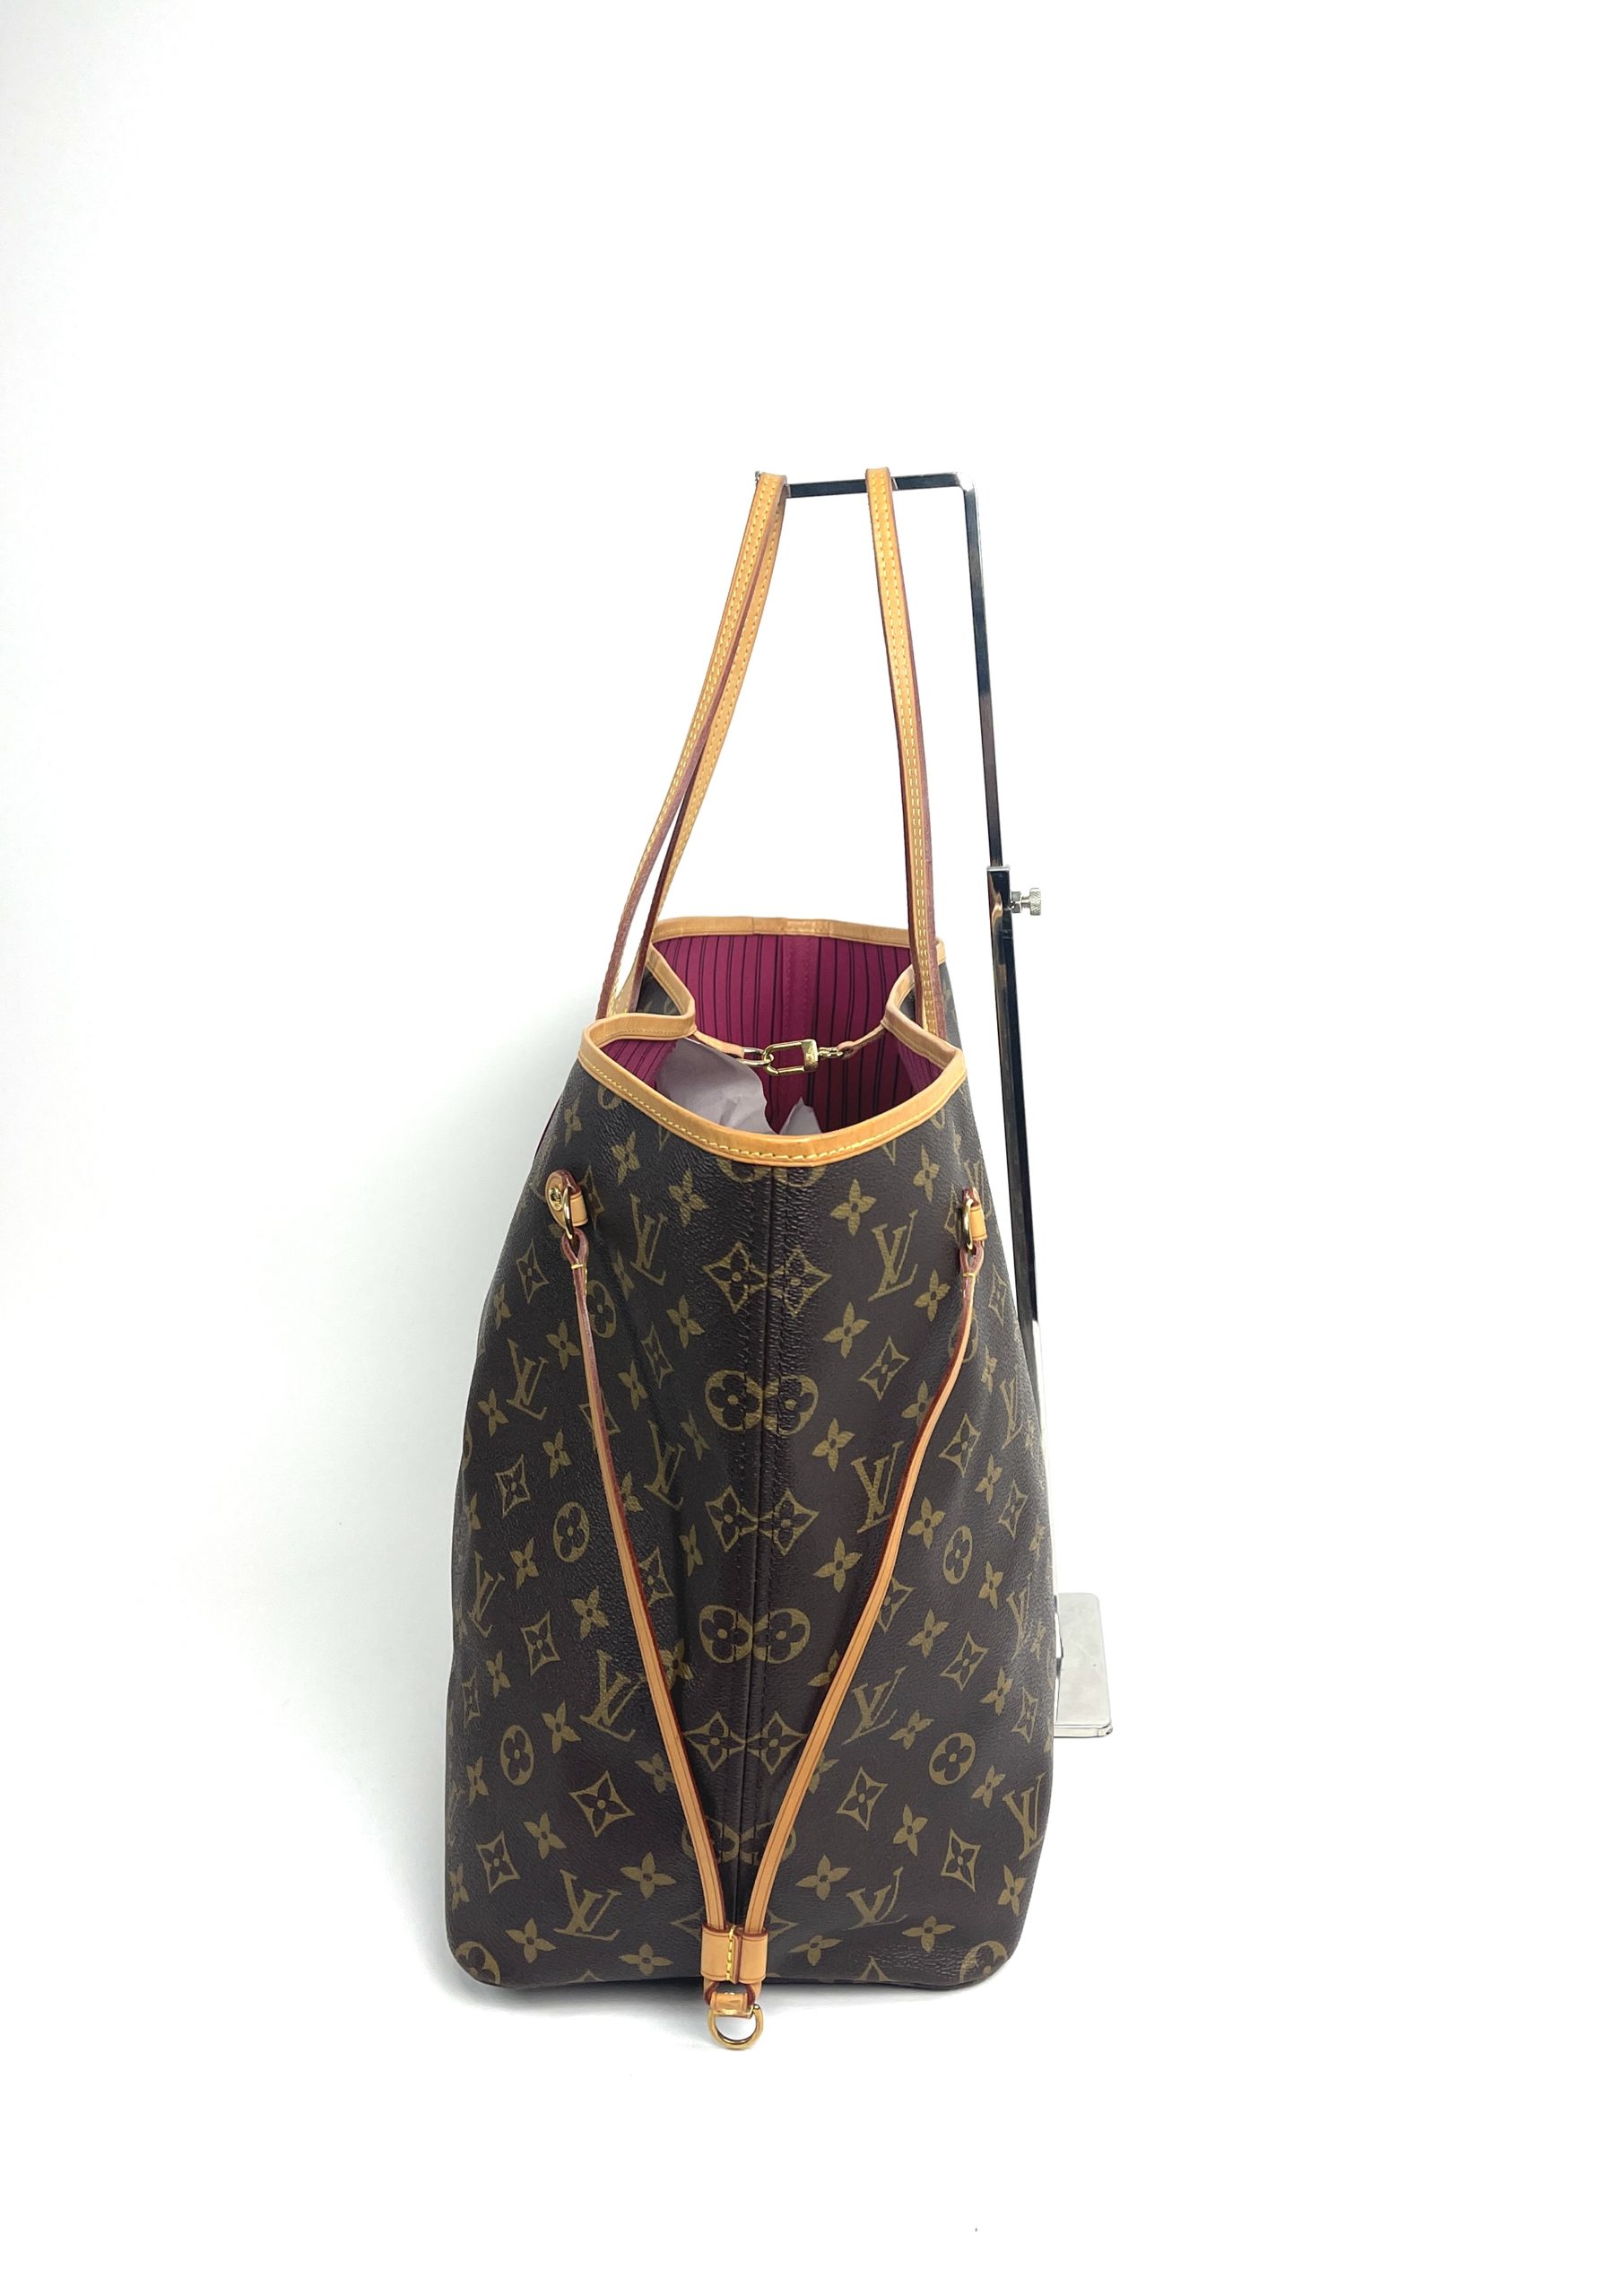 Louis Vuitton Monogram Neverfull GM M40157 Women's Tote Bag